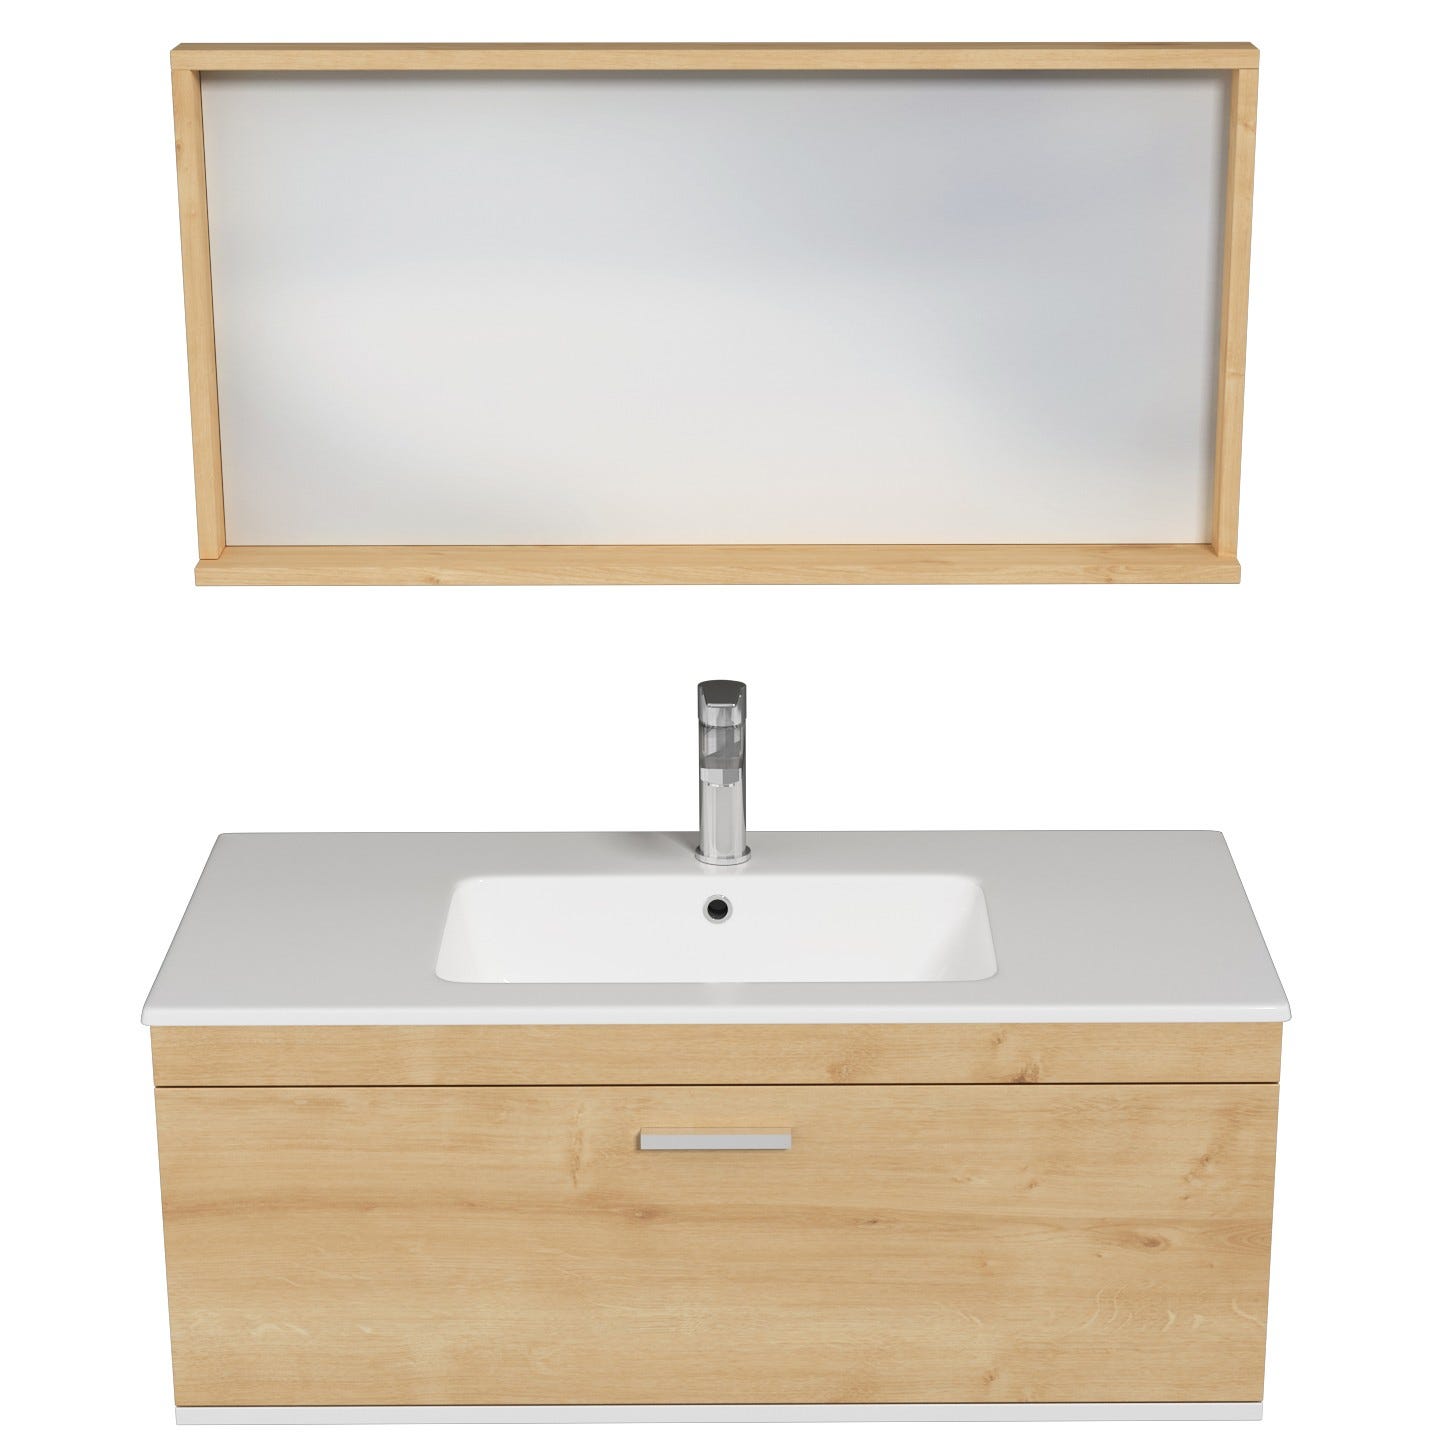 RUBITE Meuble salle de bain simple vasque 1 tiroir chêne clair largeur 100 cm + miroir cadre 3